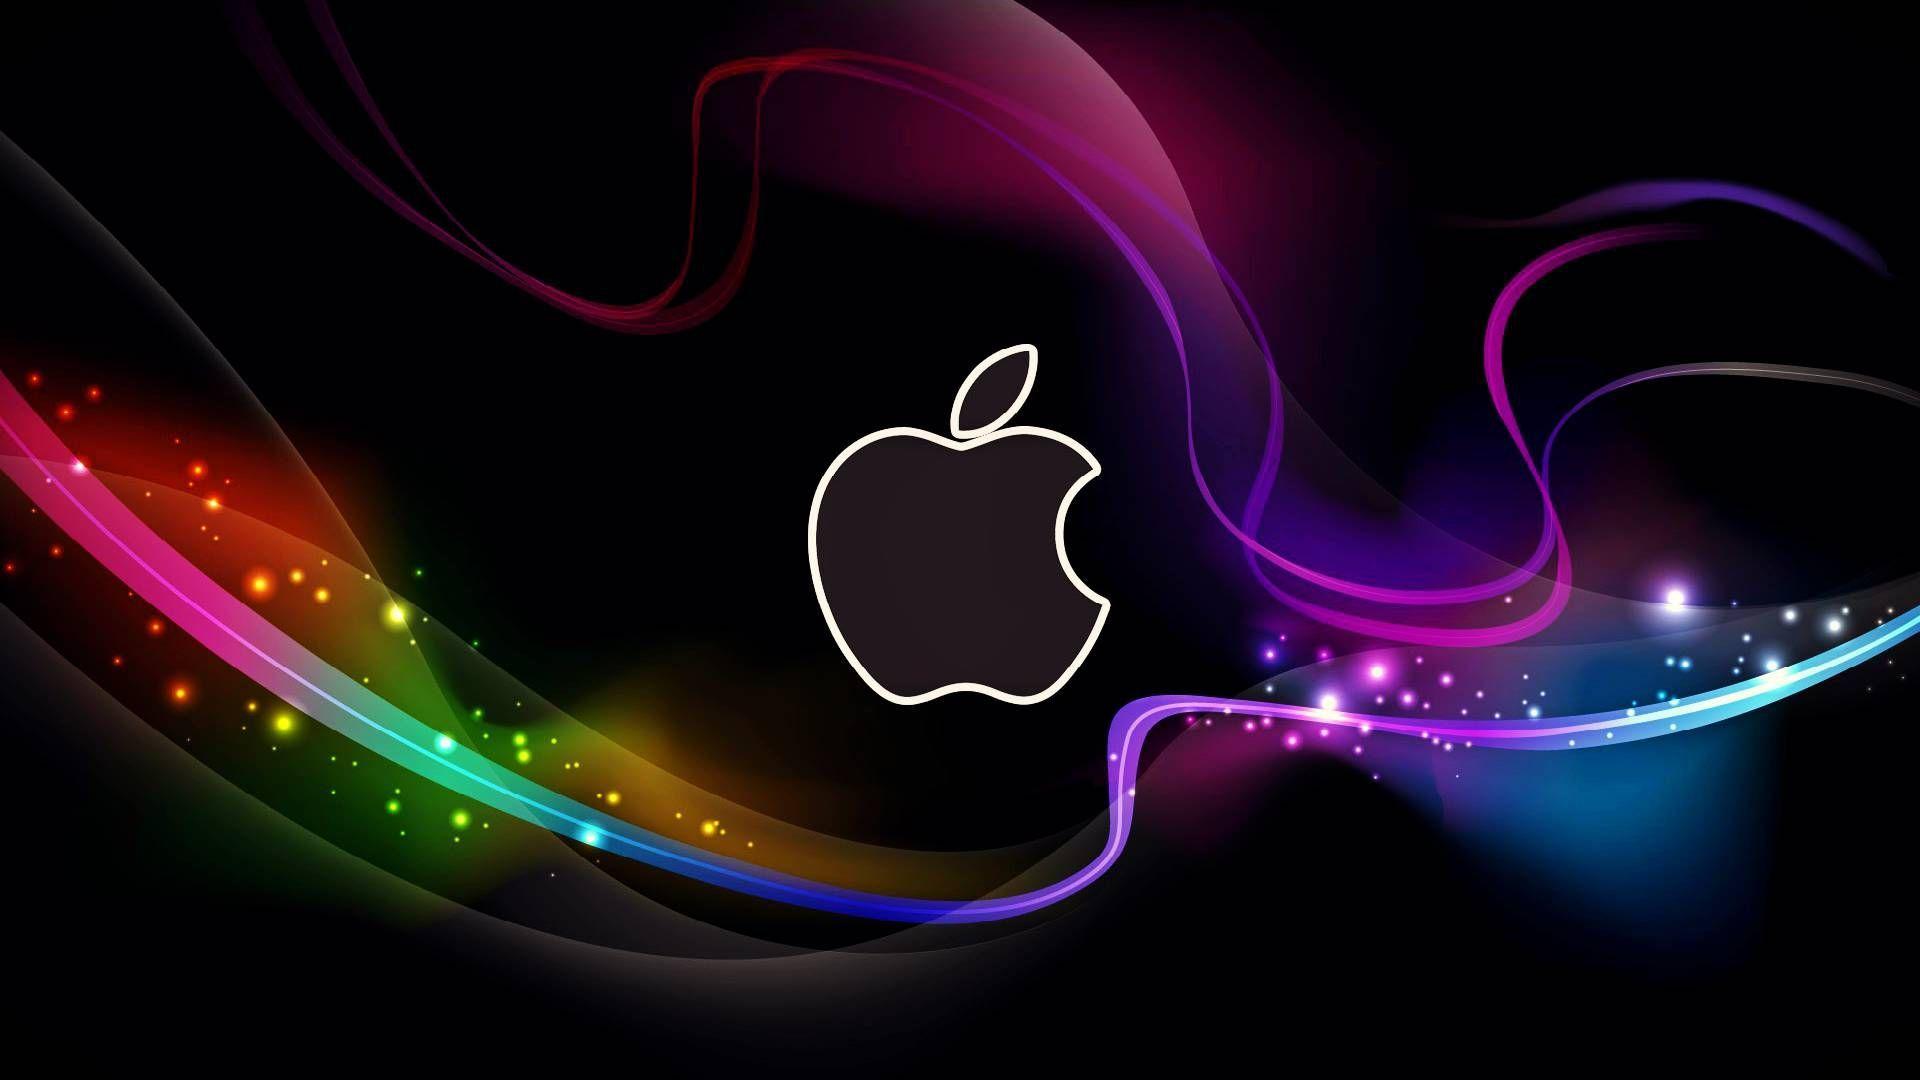 Cool Apple Logo Wallpaper. iPad Wallpaper